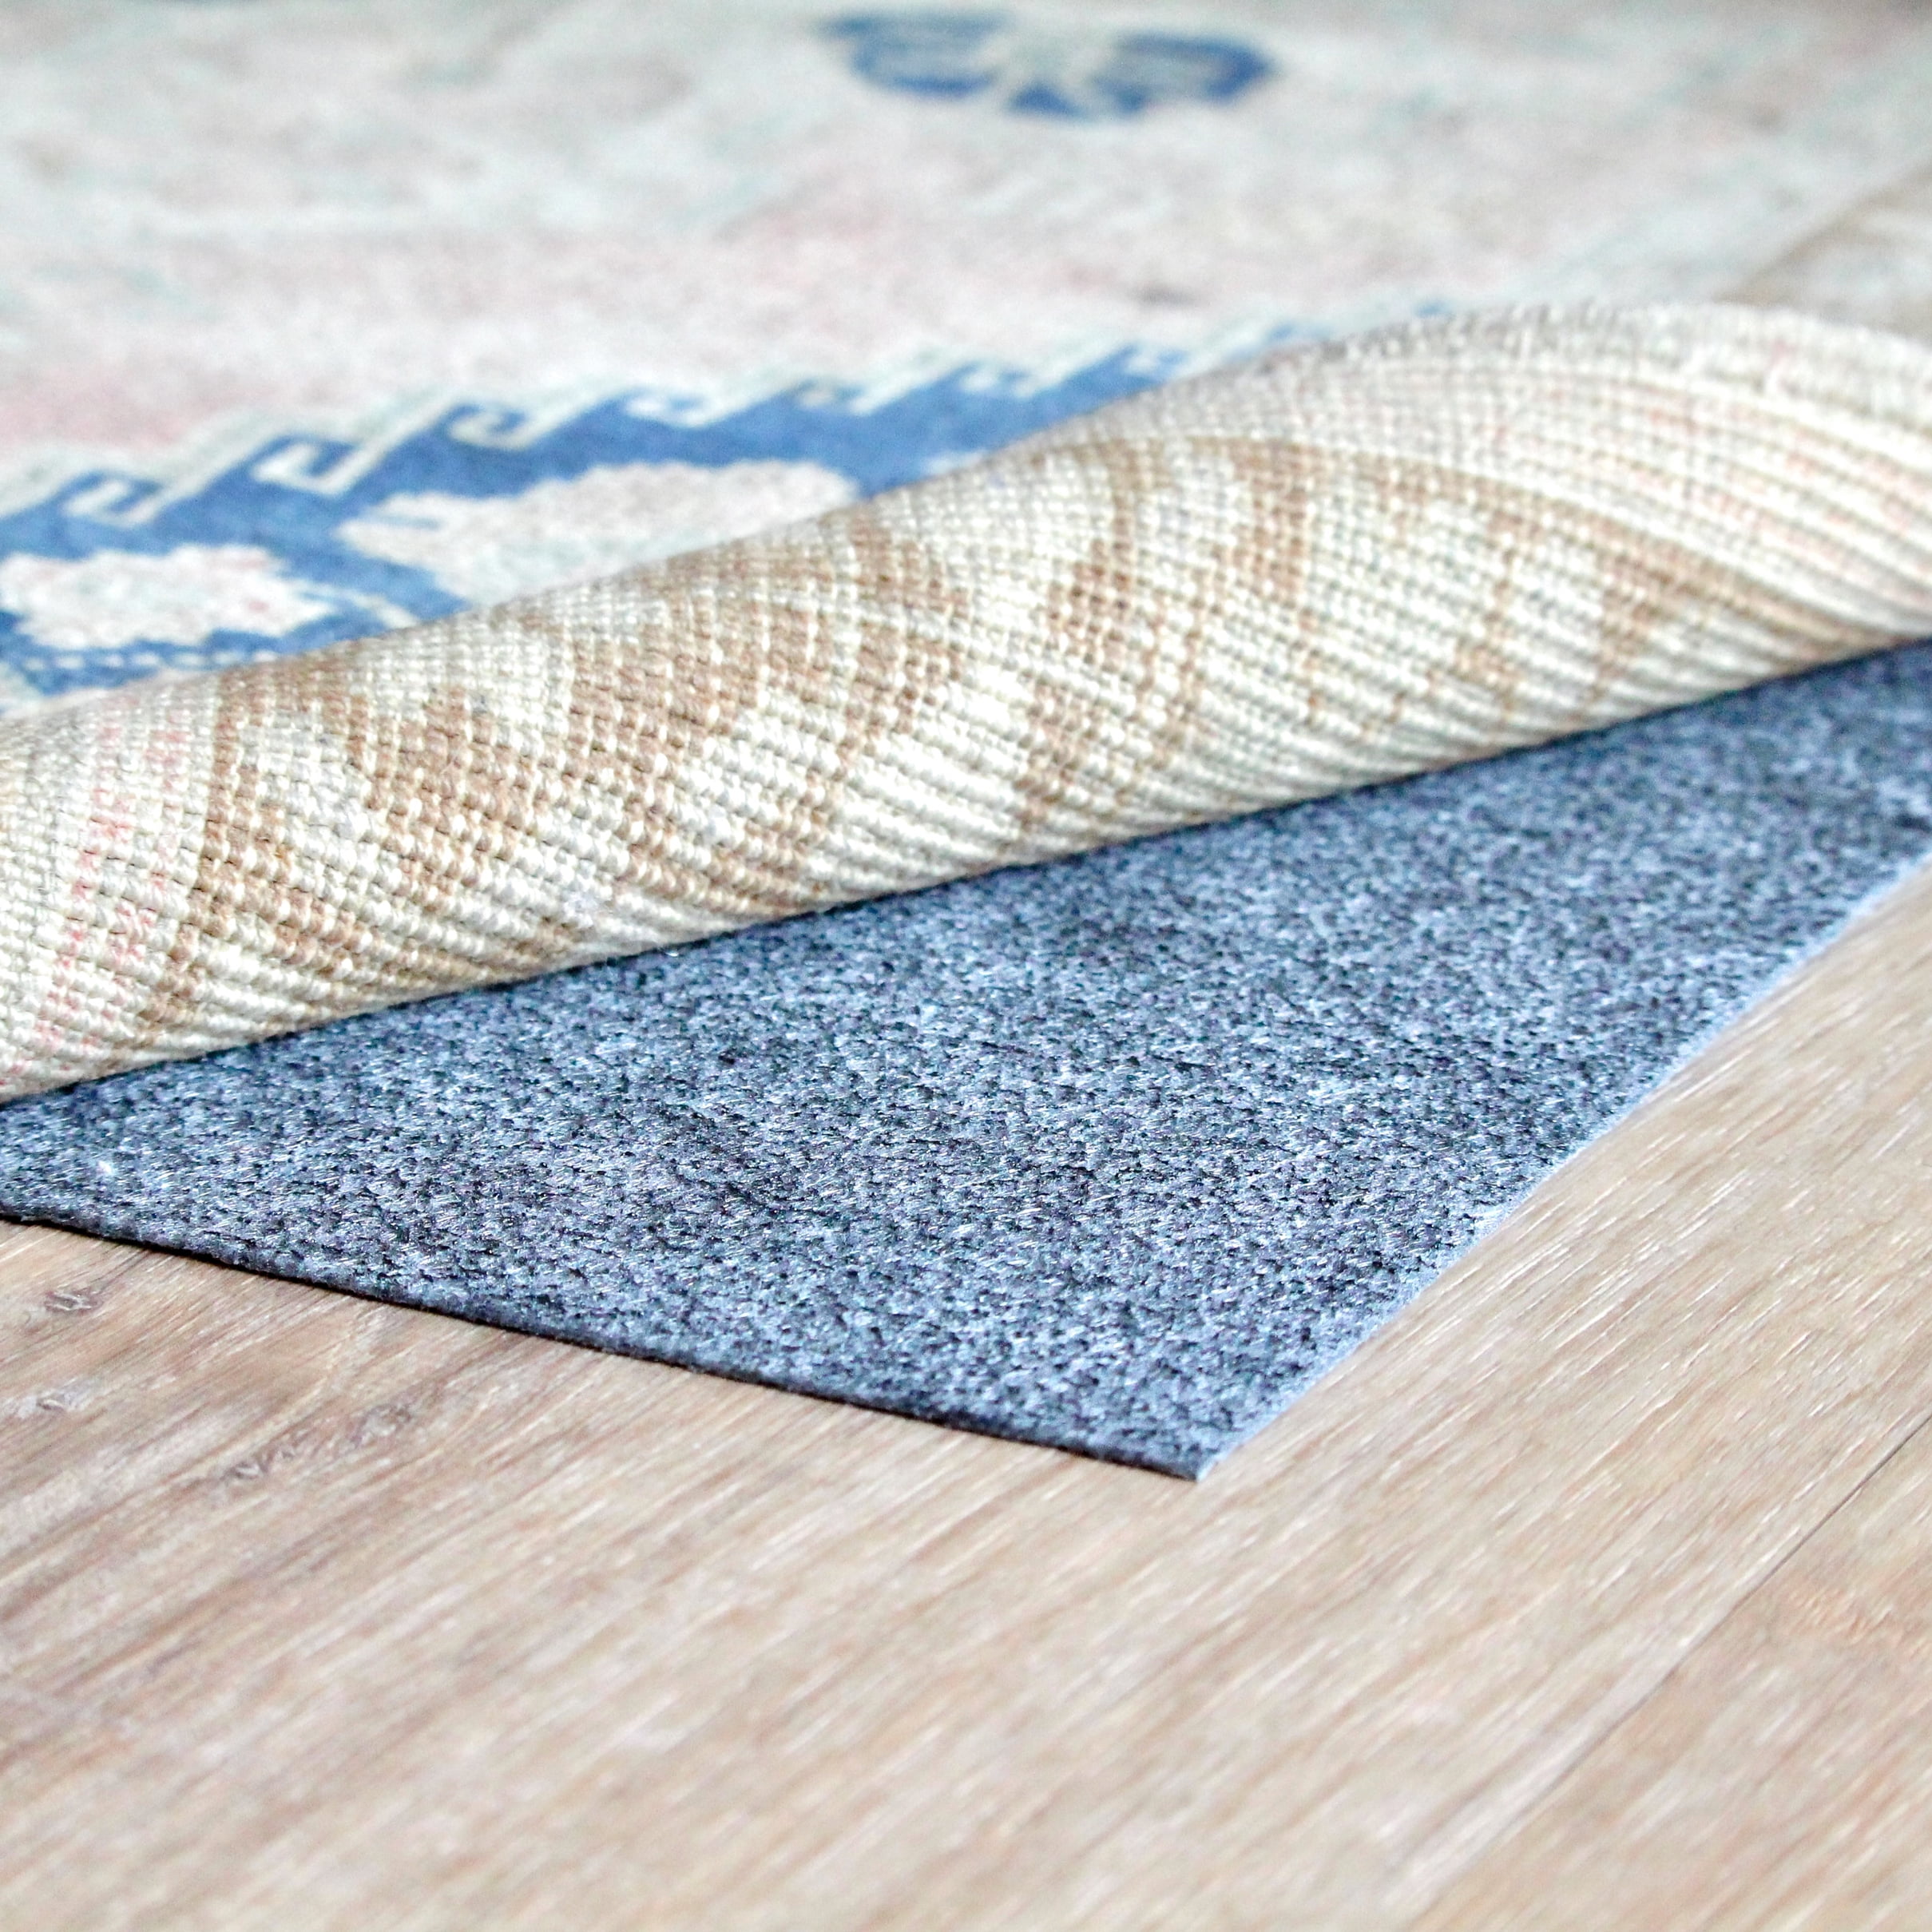 Double Sided Ultra Strong Anti-Slip Rug Felt Pad 3 x 5 ft for Hardwood  Floors, Non Slip Carpet Padding, Thin Profile Non Skid Carpet Mat Keep Your